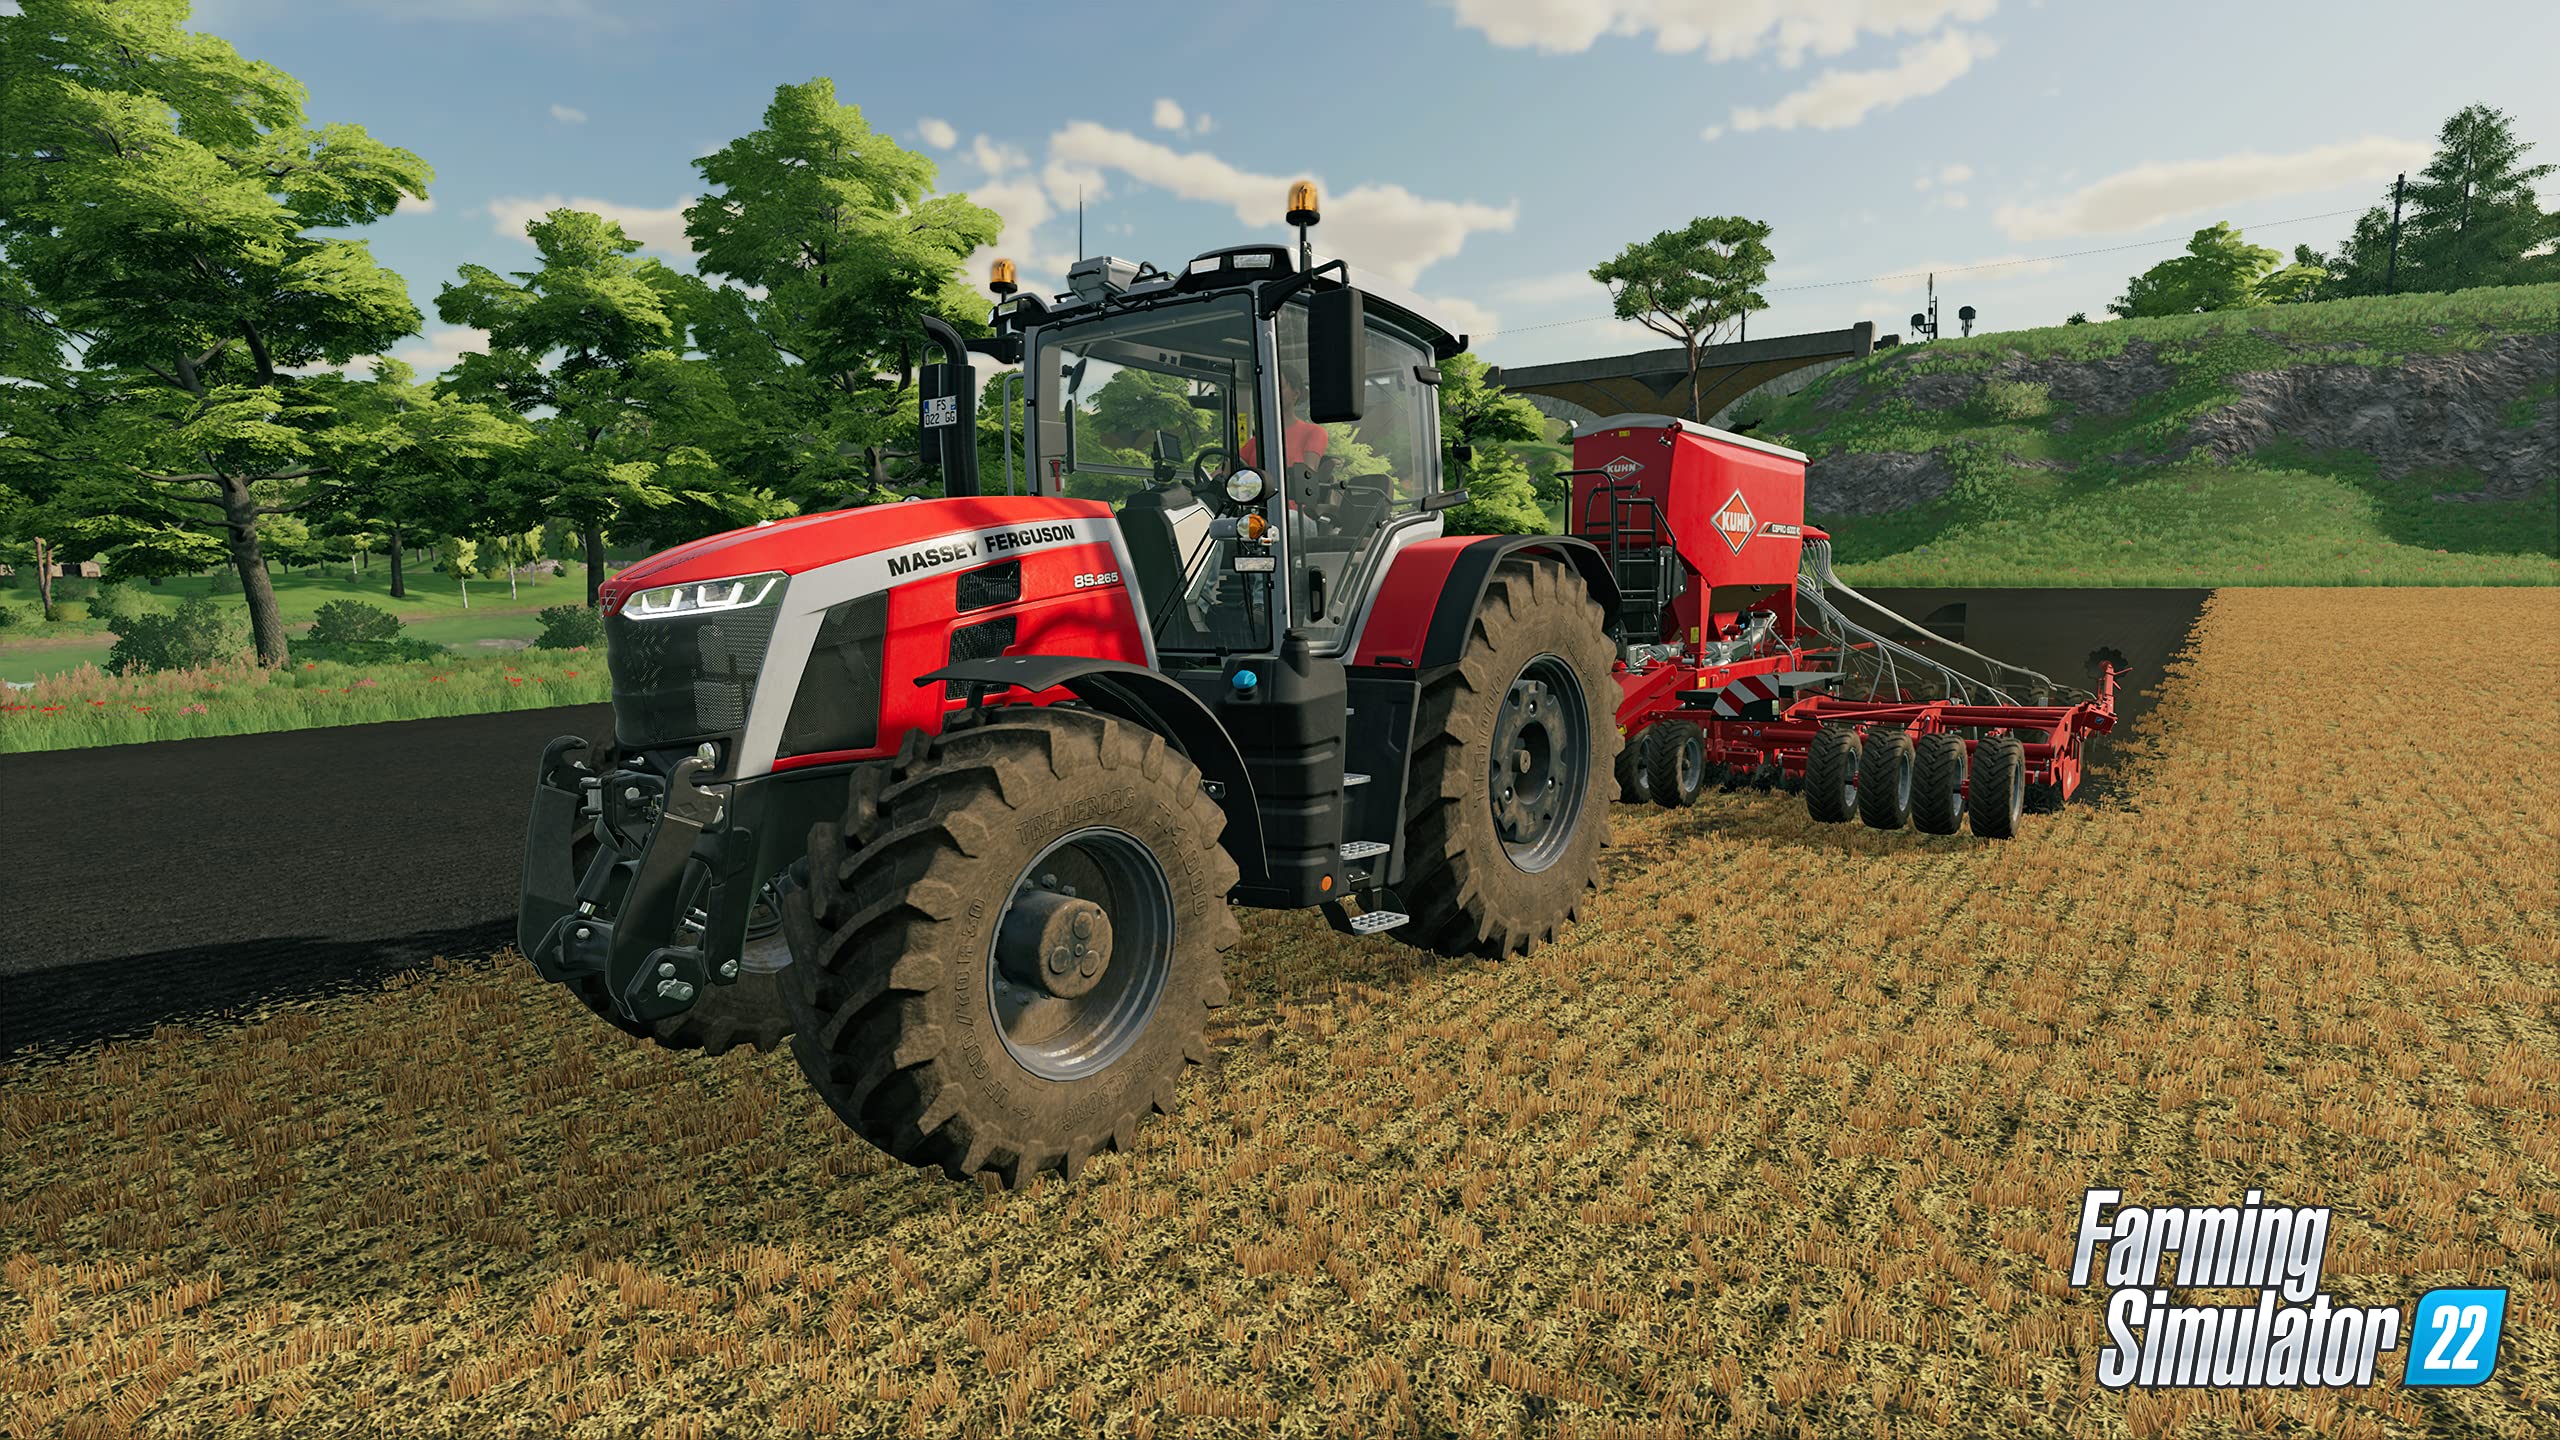 Farming Simulator 22 - PC